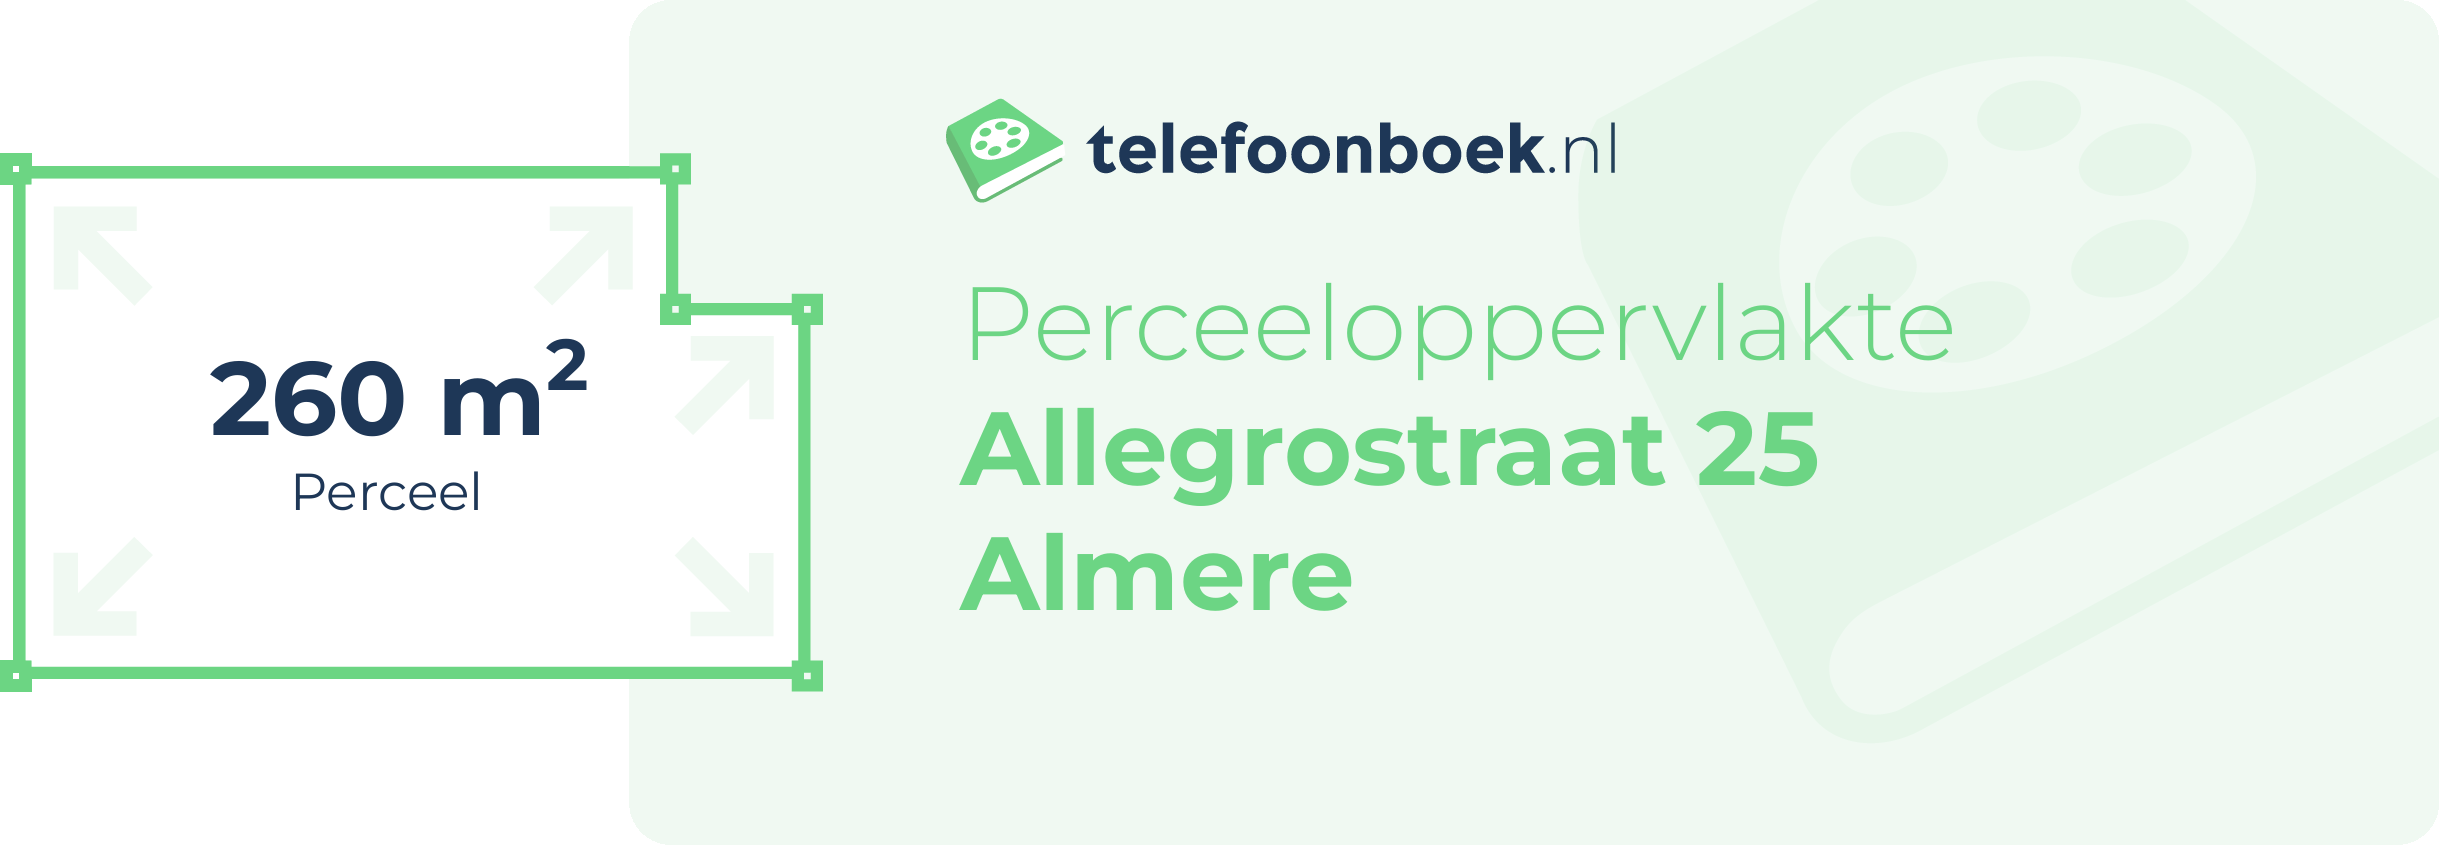 Perceeloppervlakte Allegrostraat 25 Almere